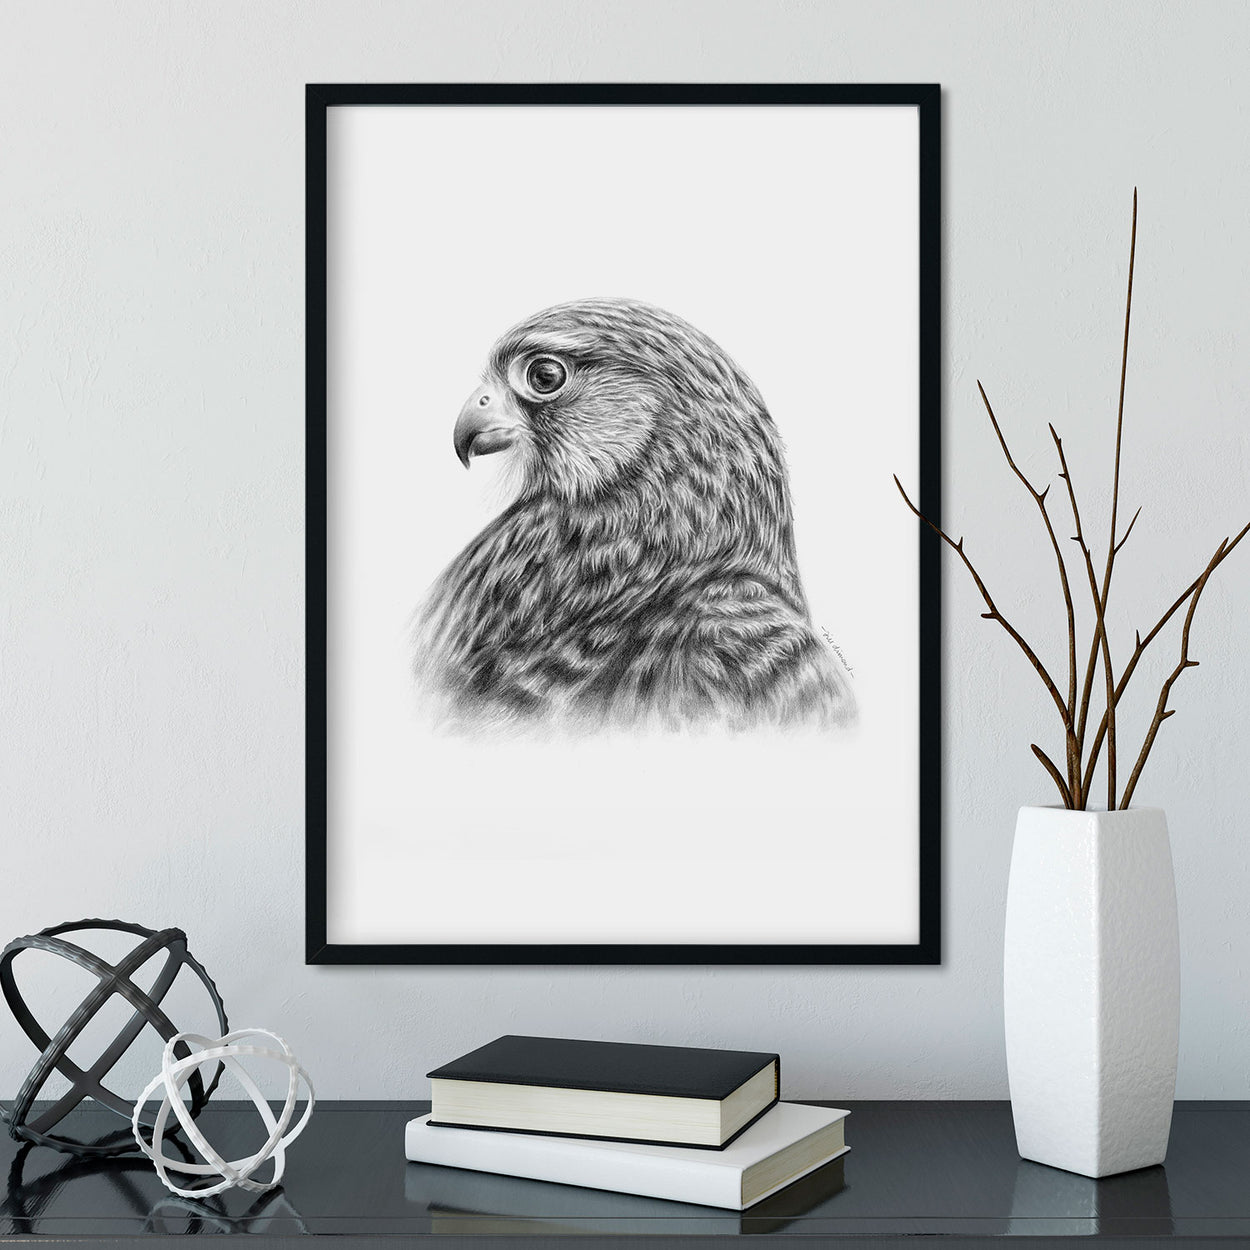 Kestrel Bird of Prey Wall Art in Frame - The Thriving Wild - Jill Dimond